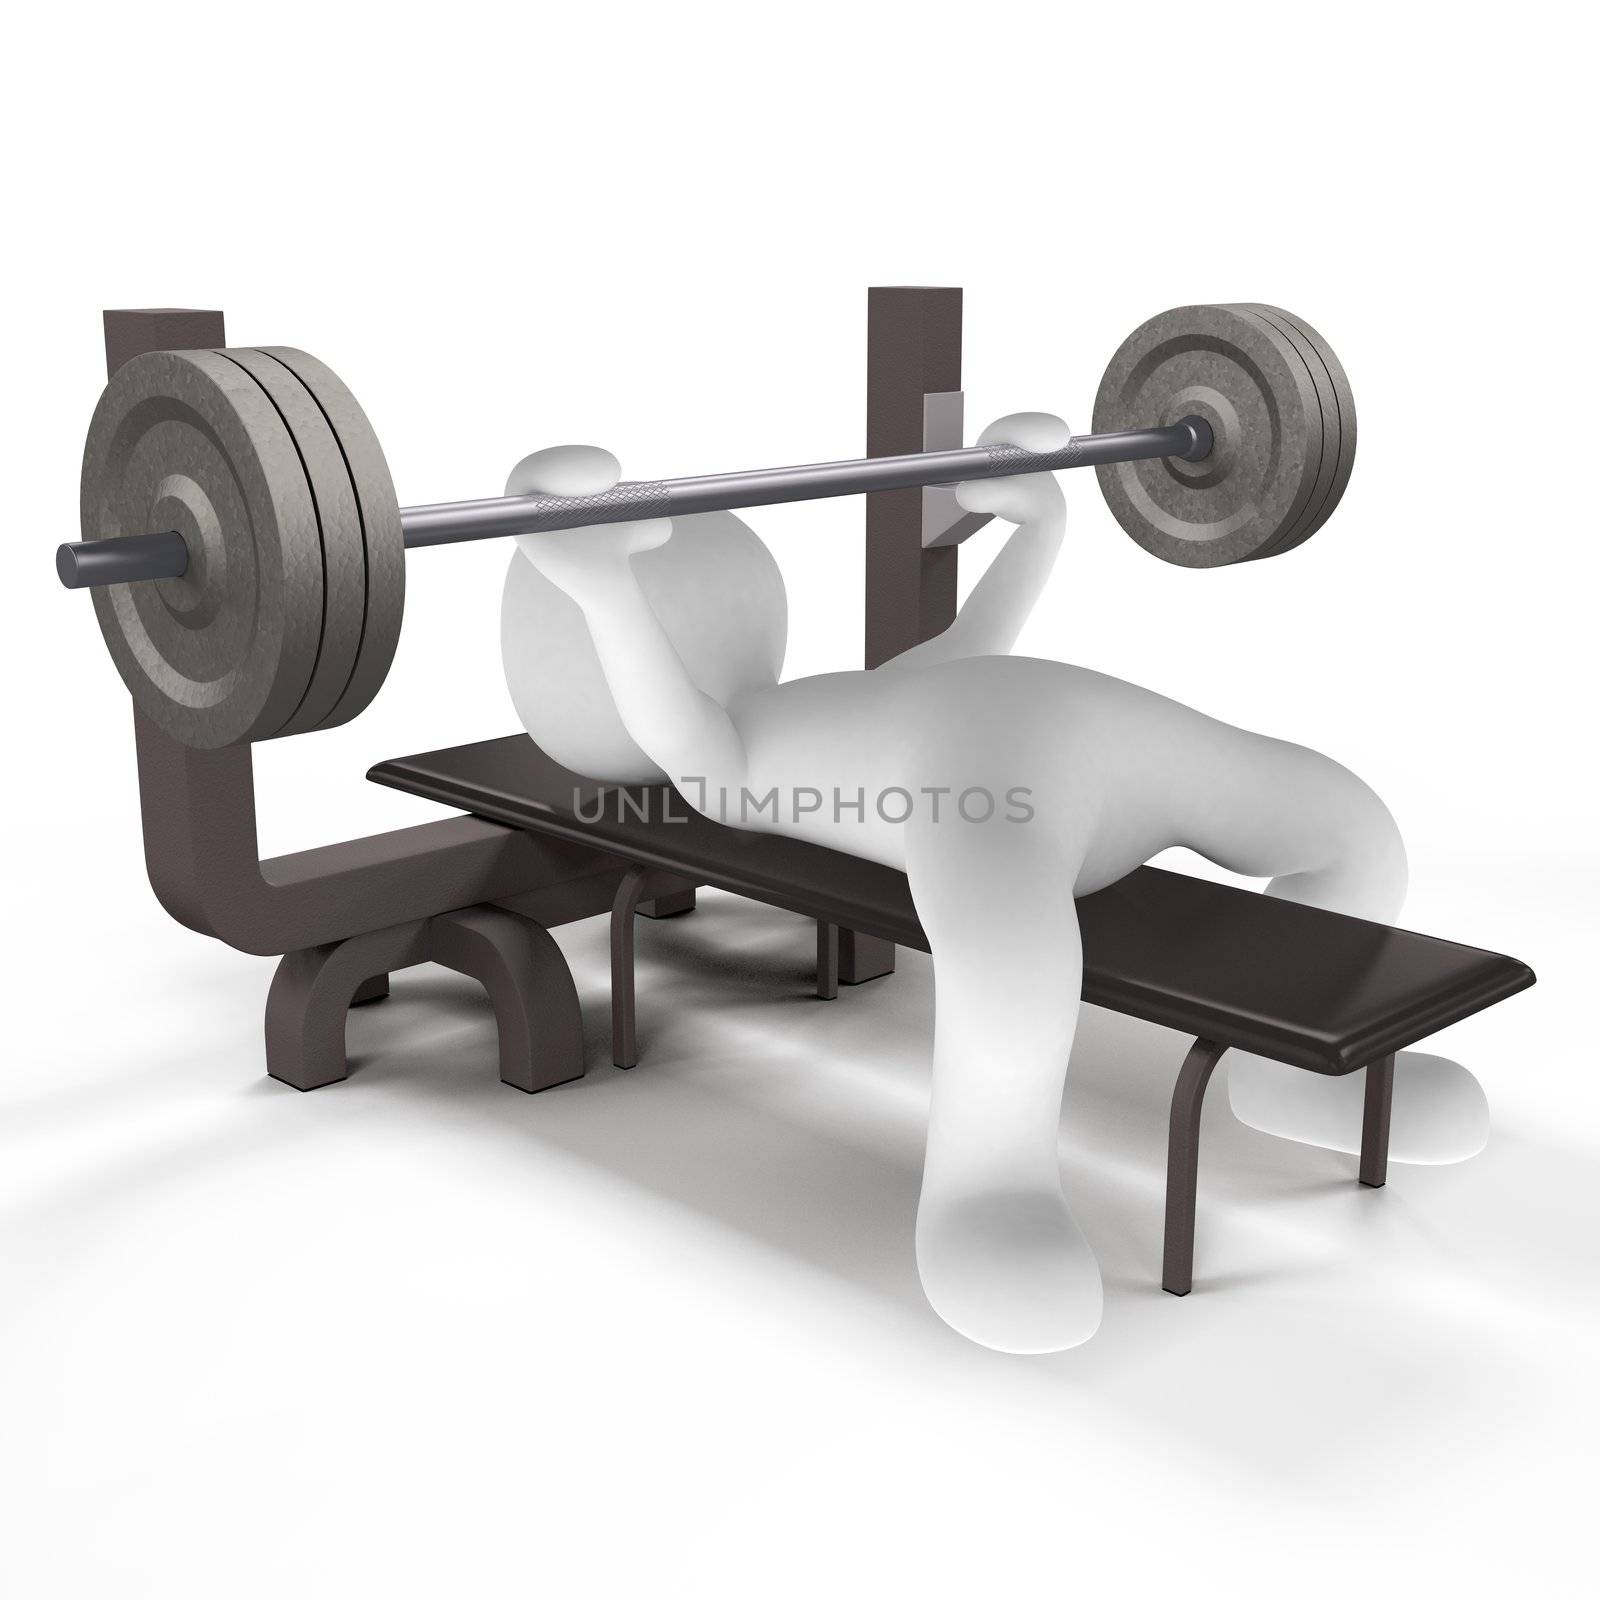 Muscles by 3DAgentur